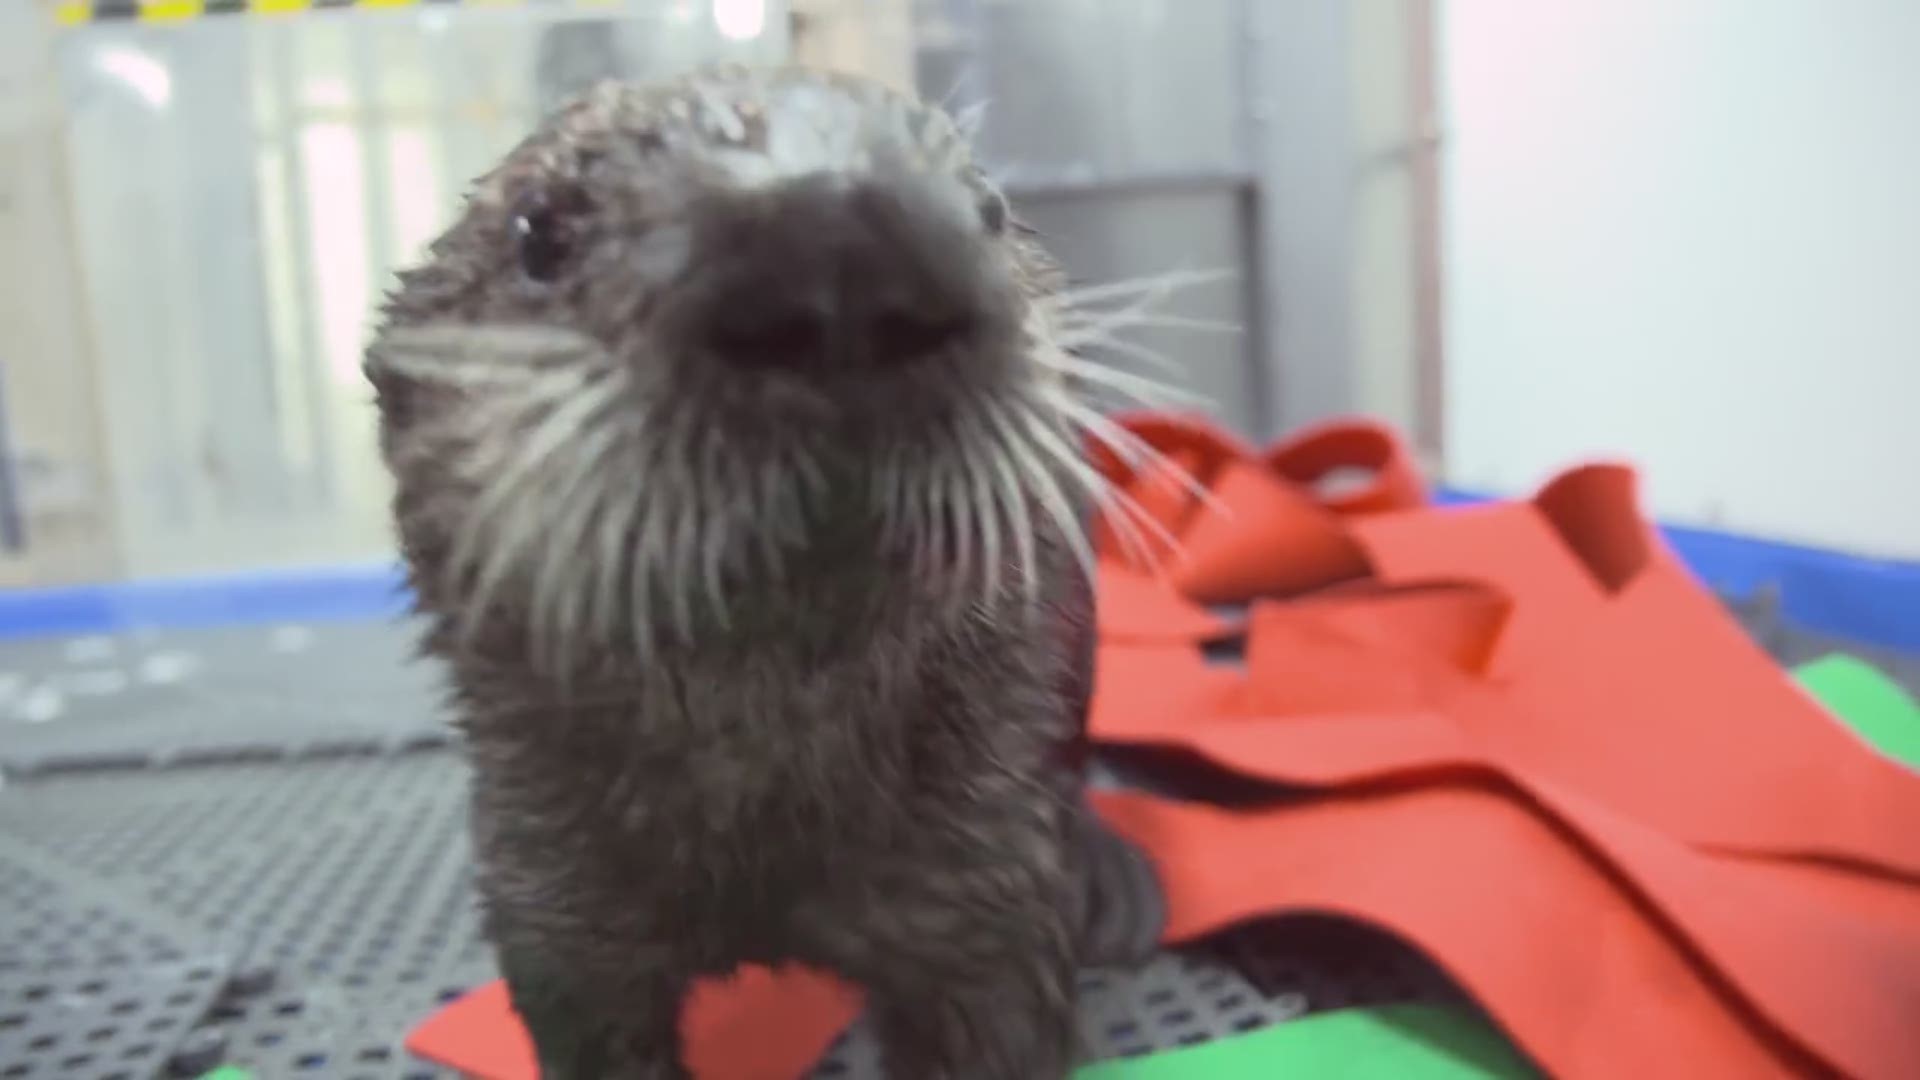 Meet rescued sea otter pups Mara and Gibson - the newest arrivals at Georgia Aquarium.